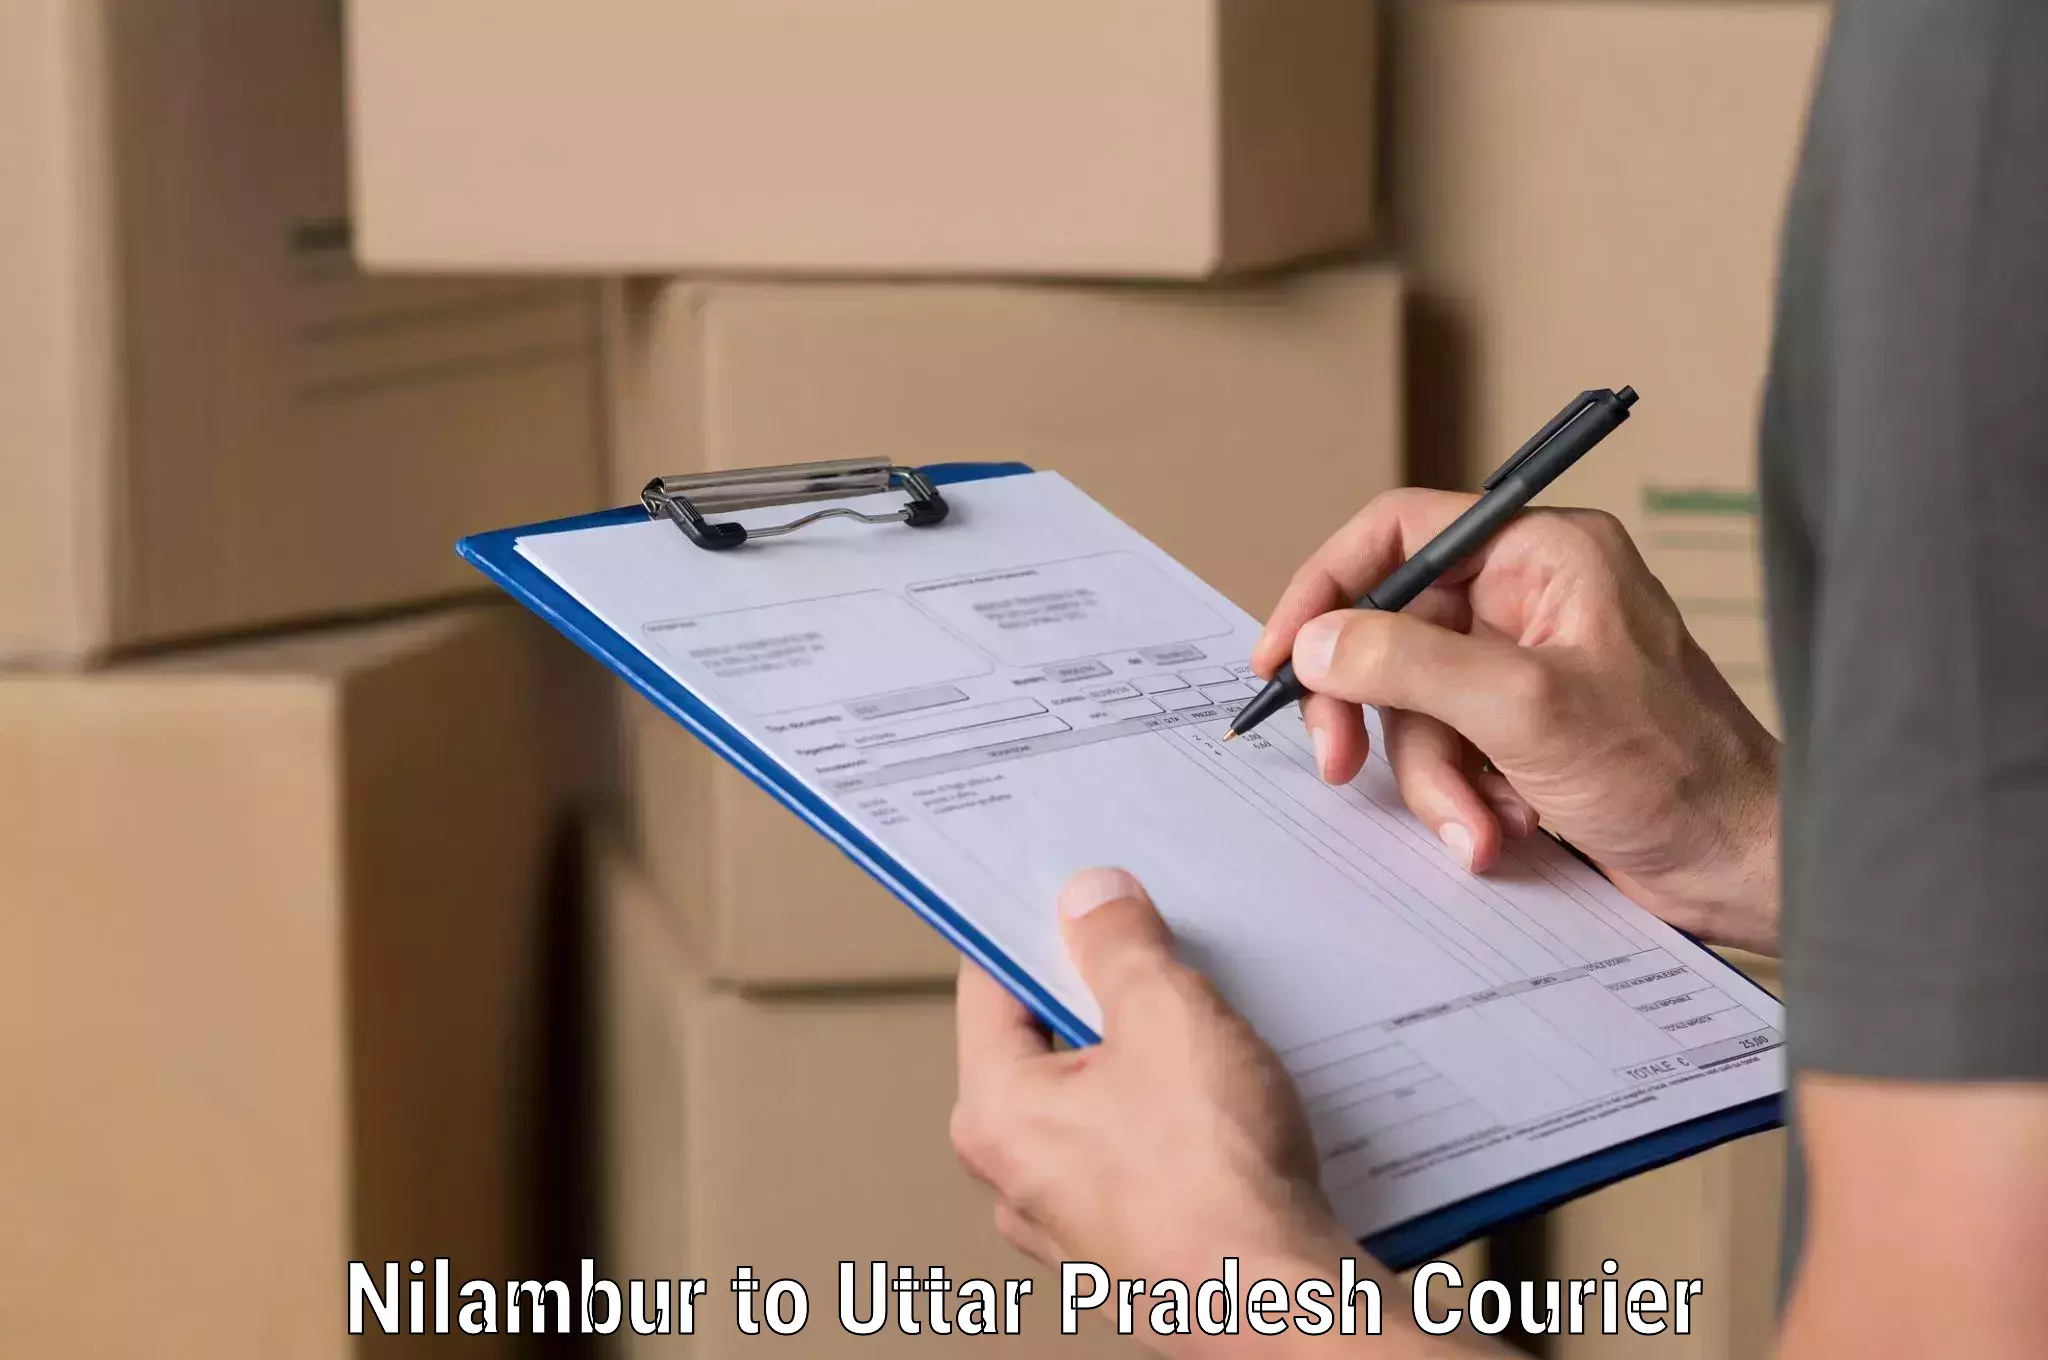 Professional courier handling Nilambur to Kasganj